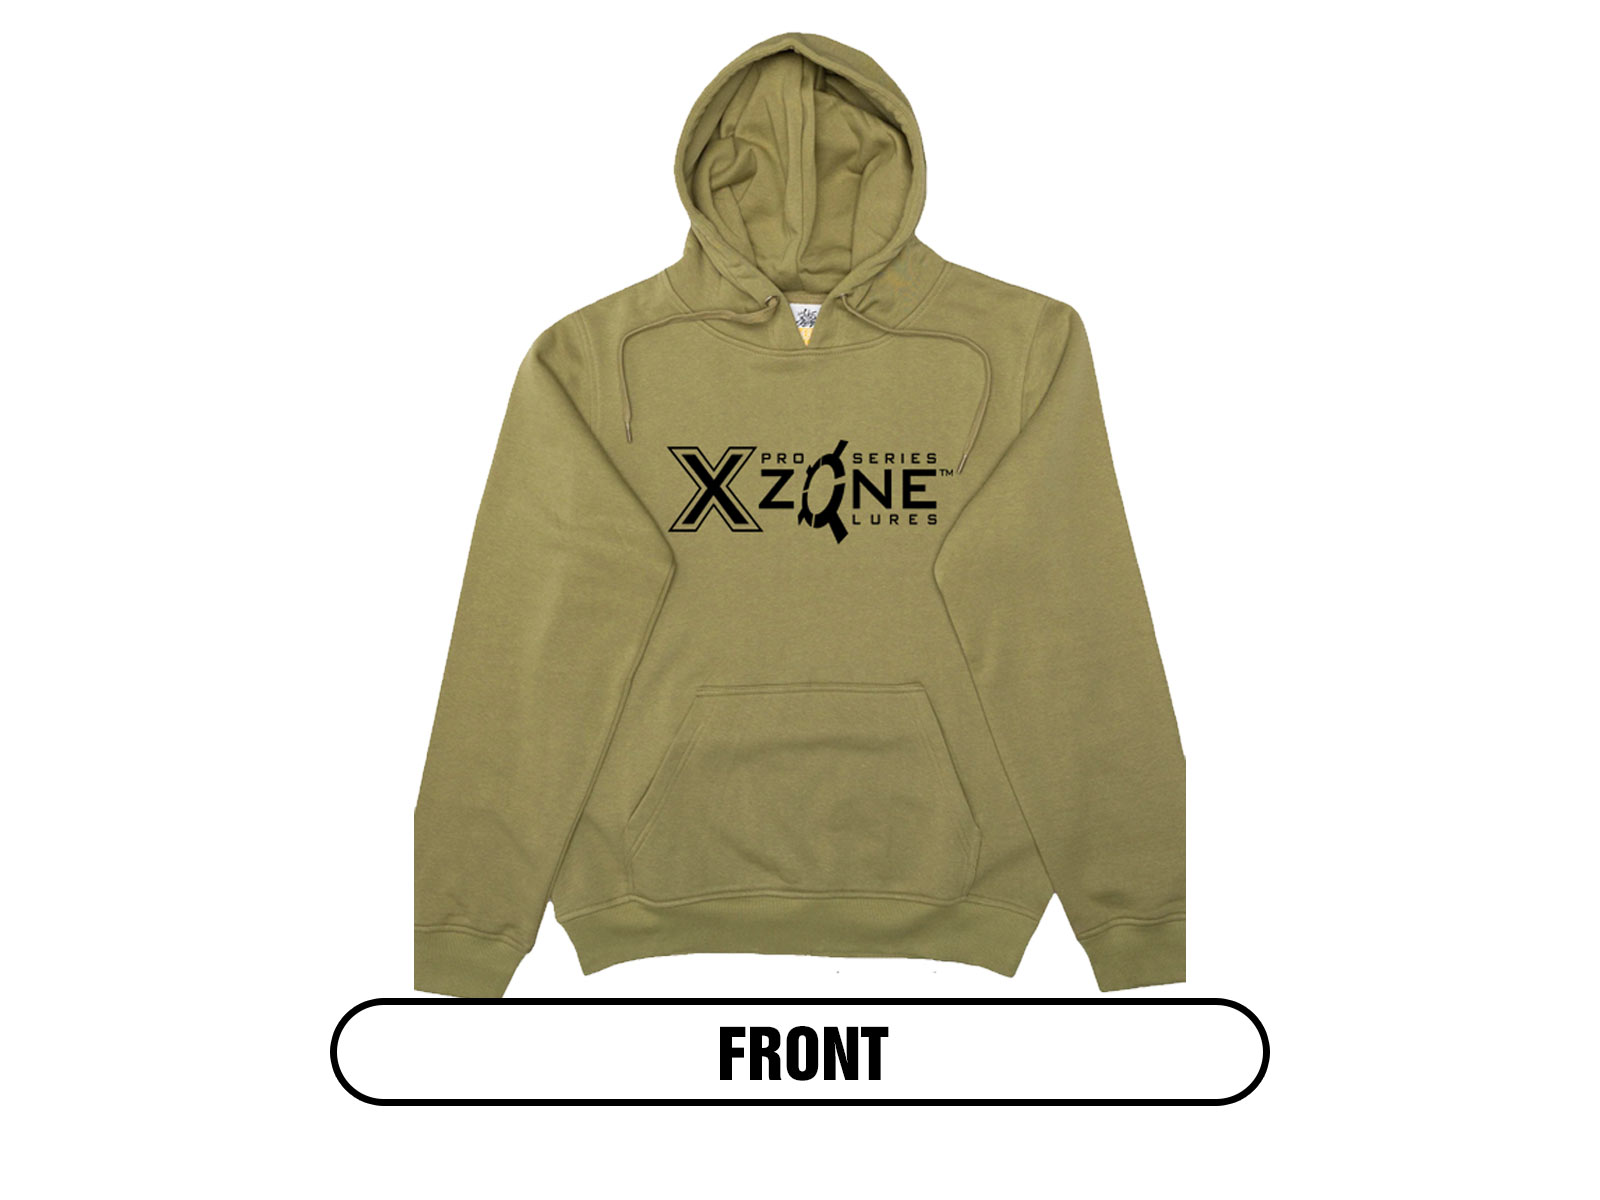 X zone lures hoodie keeps you warm